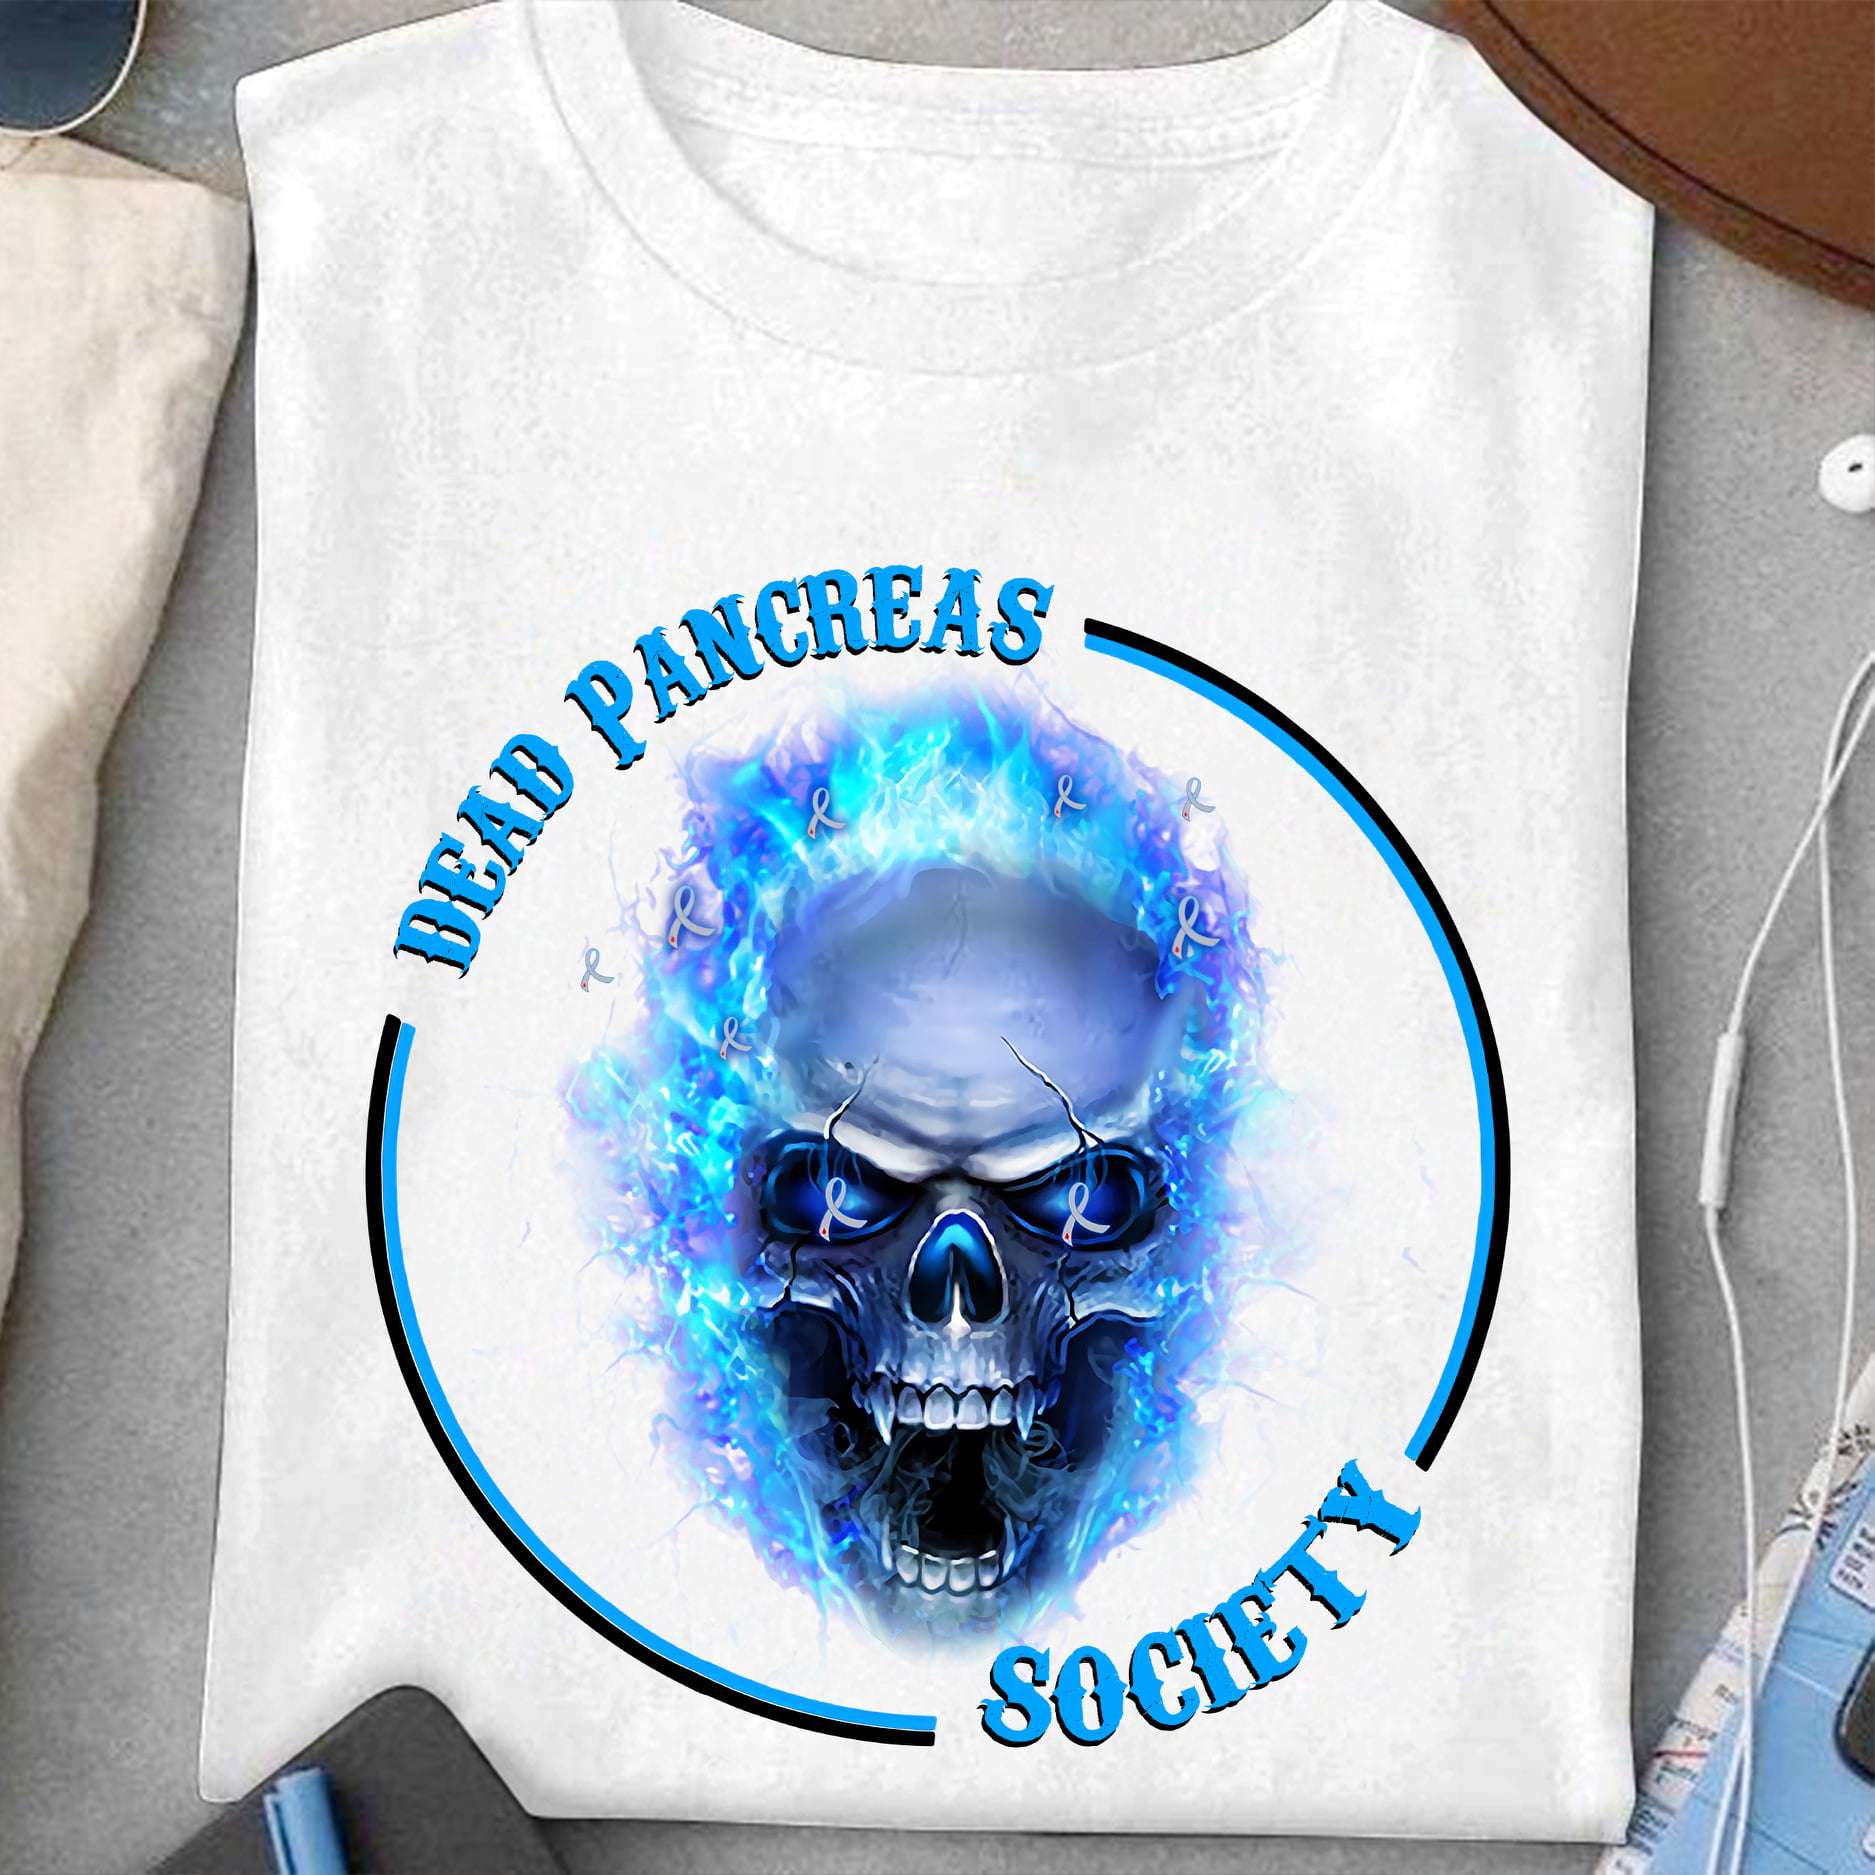 Dead pancreas society - Blue flame skull, Diabetes awareness